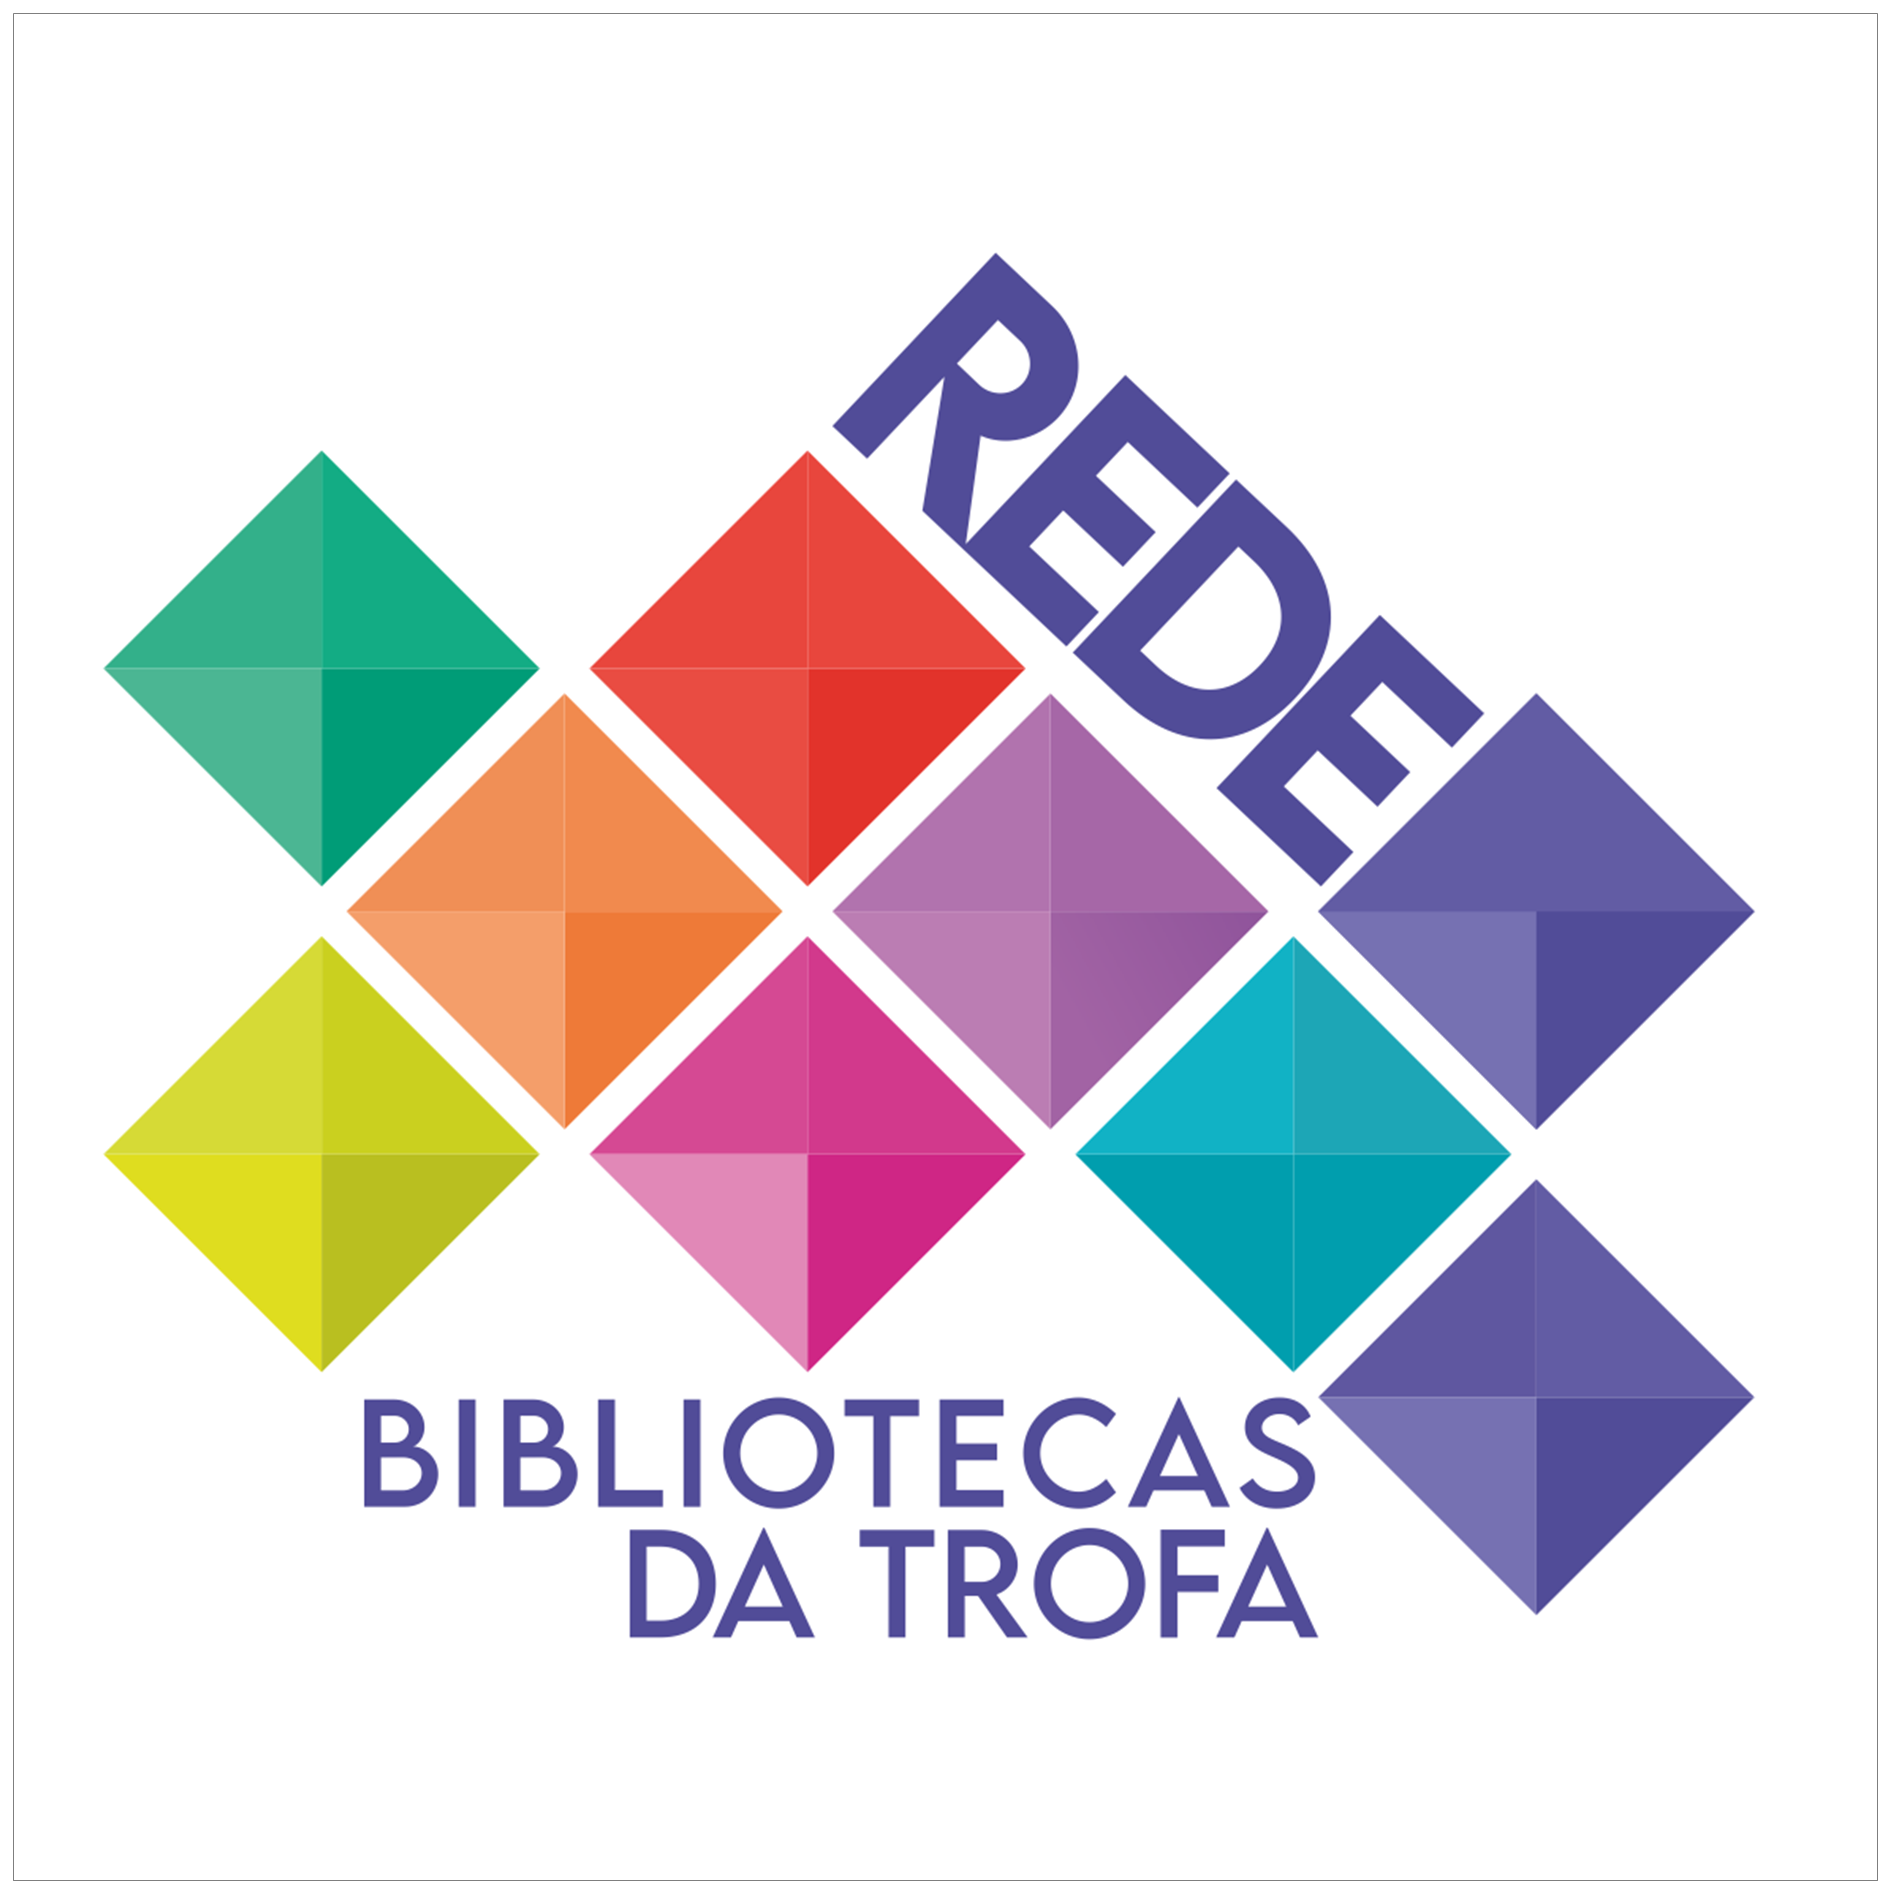 Rede_Bibliotecas_da_Trofa.png>